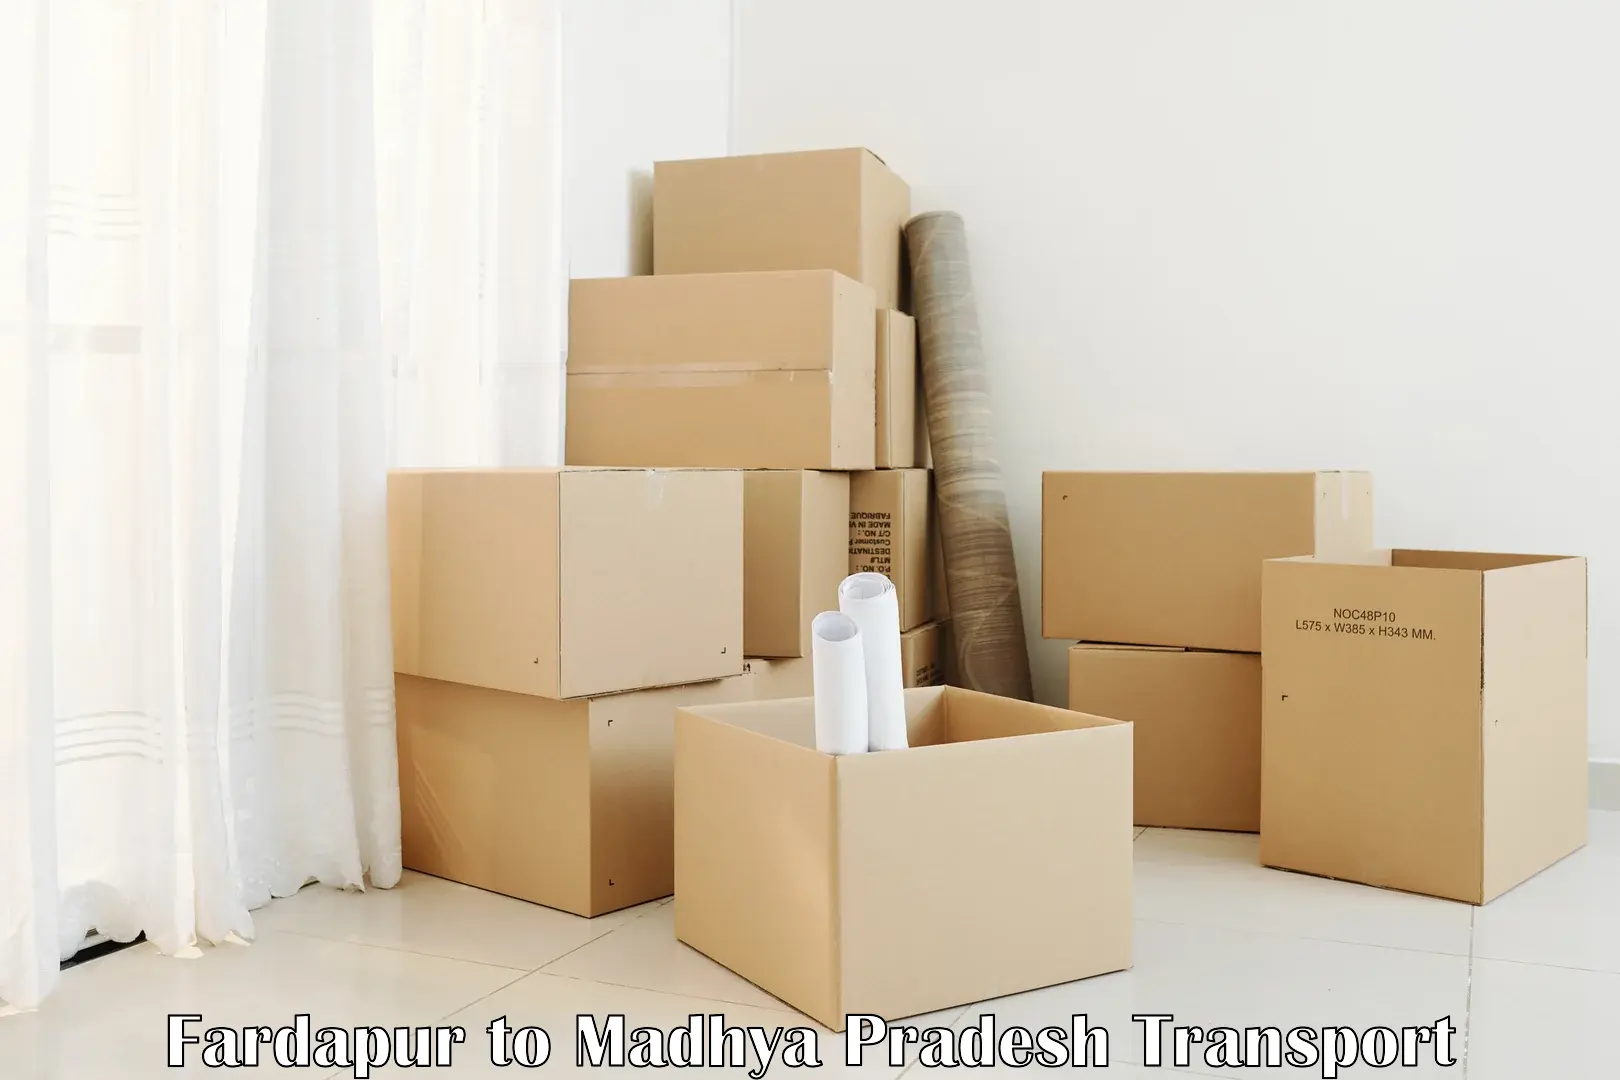 Goods delivery service Fardapur to Jatara